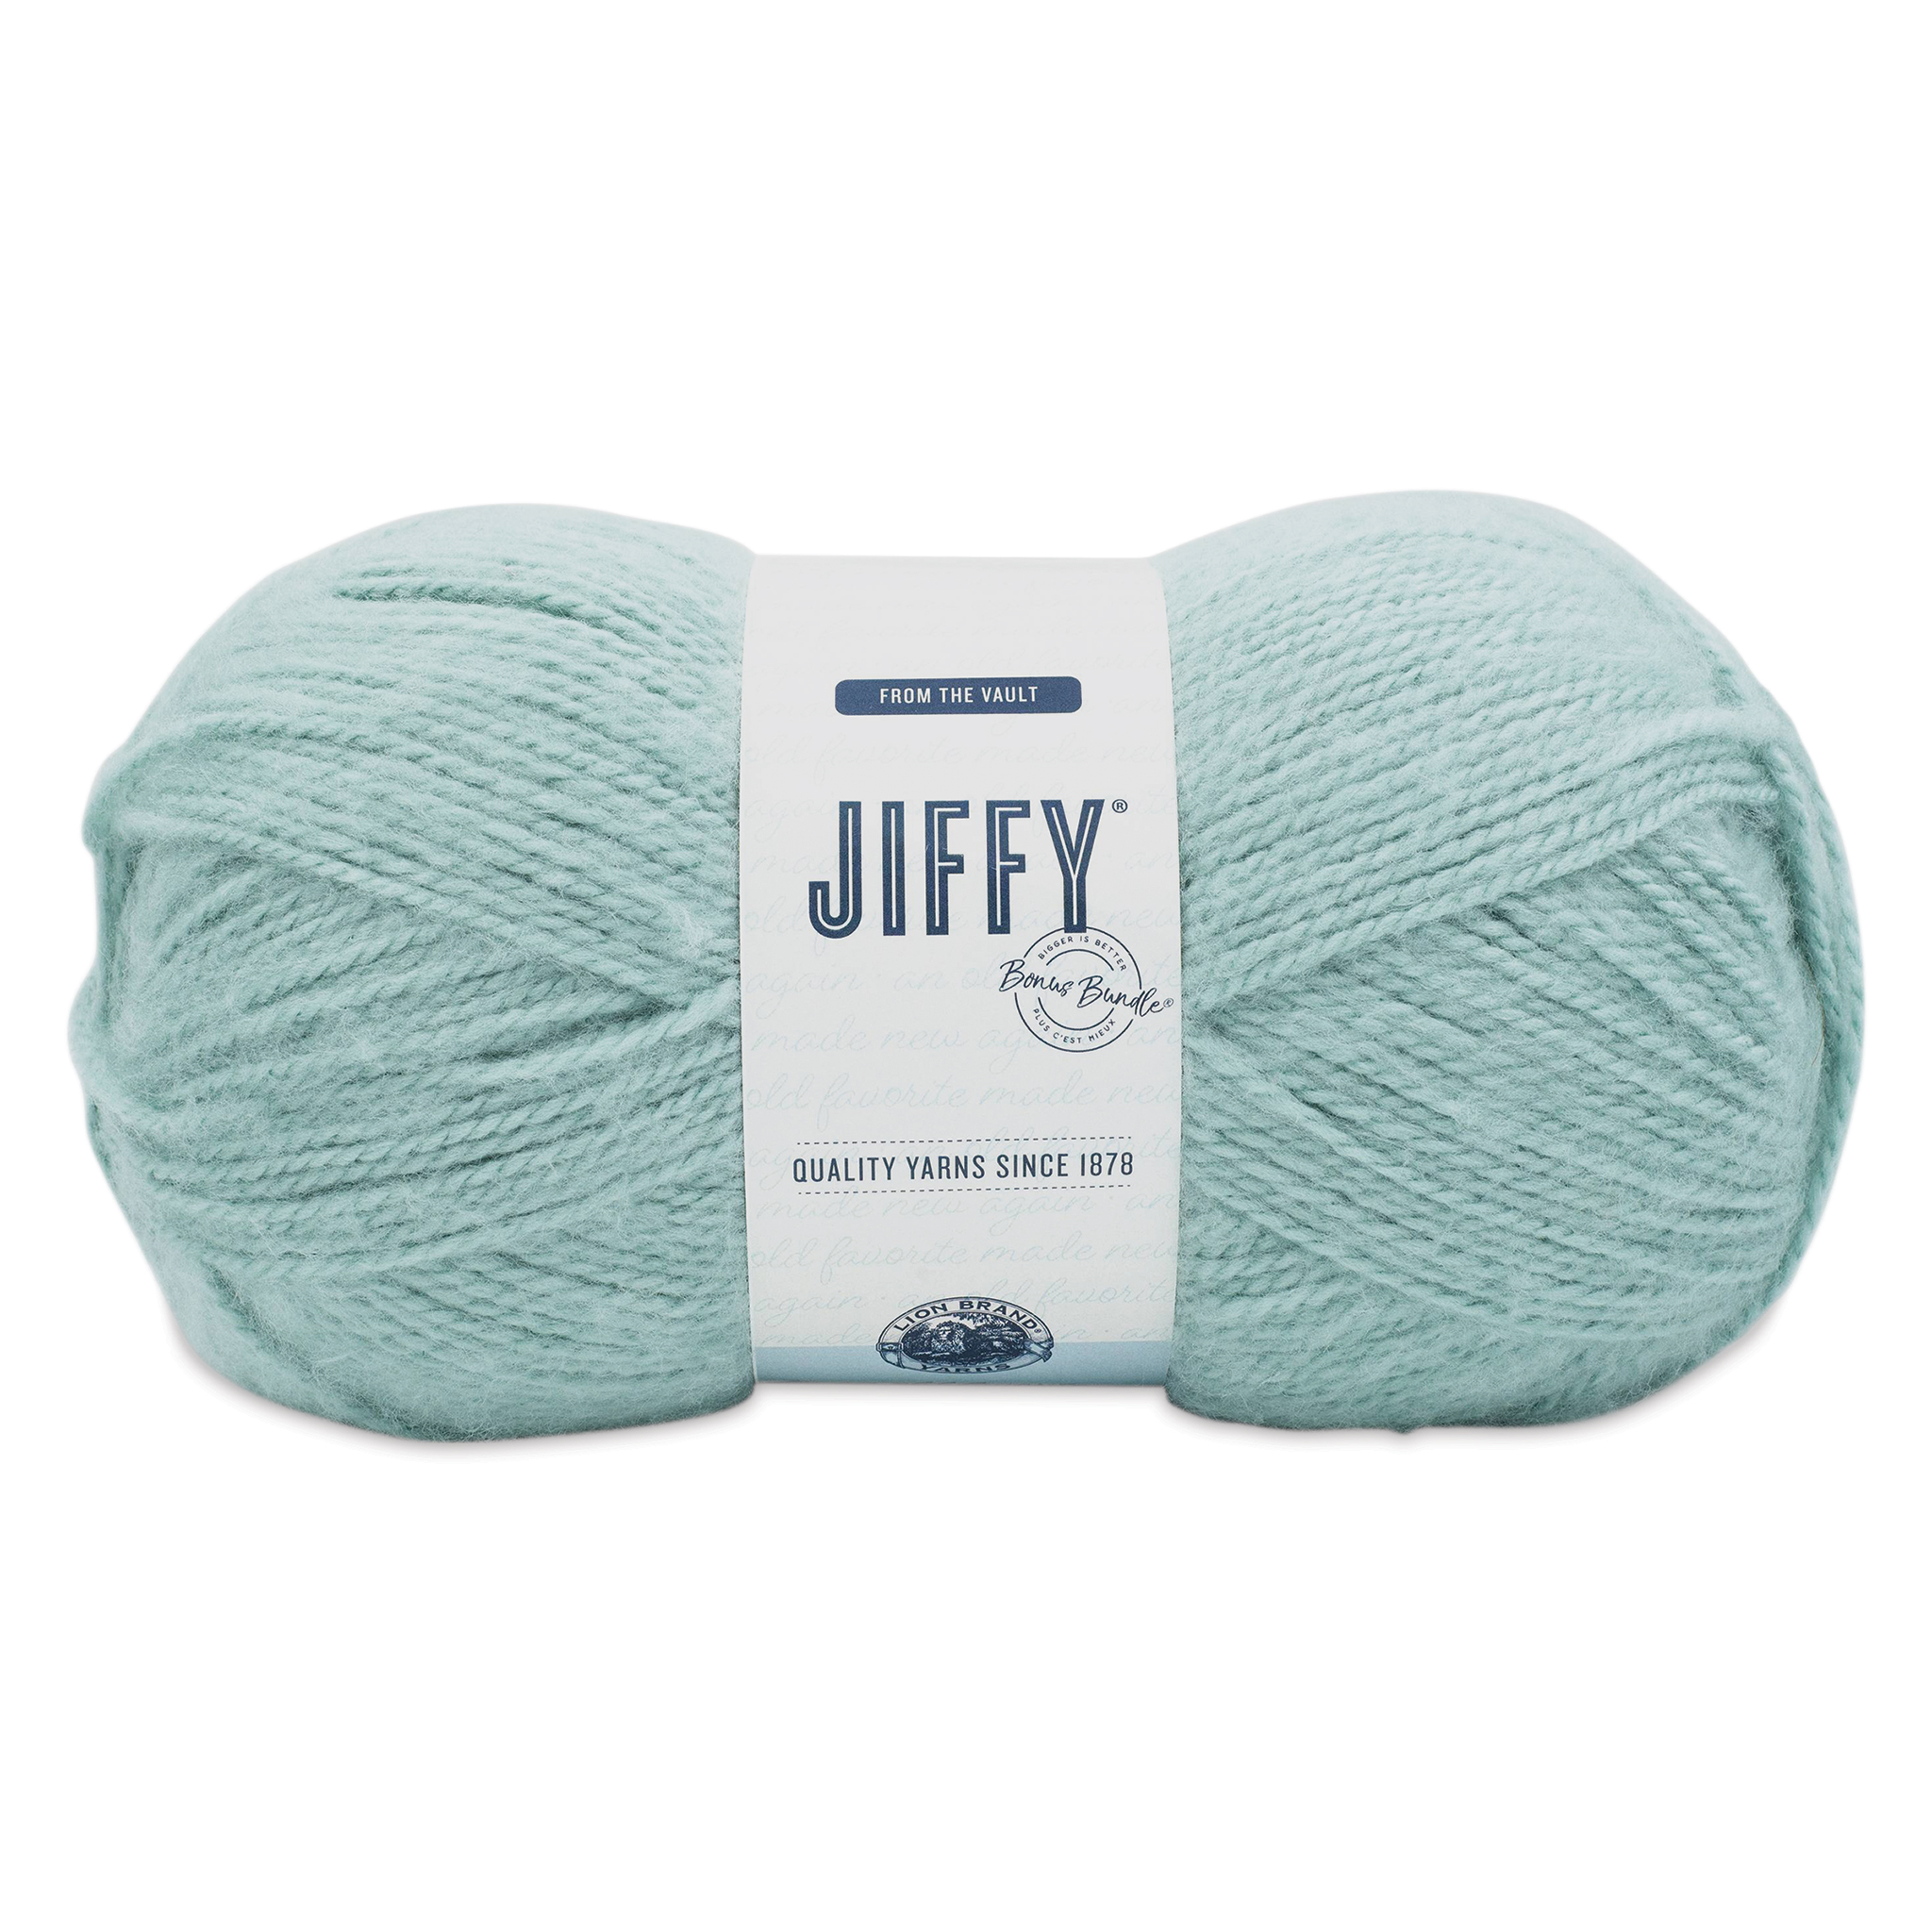 Lion Brand Jiffy Bonus Bundle Yarn - Blush, 681 yards